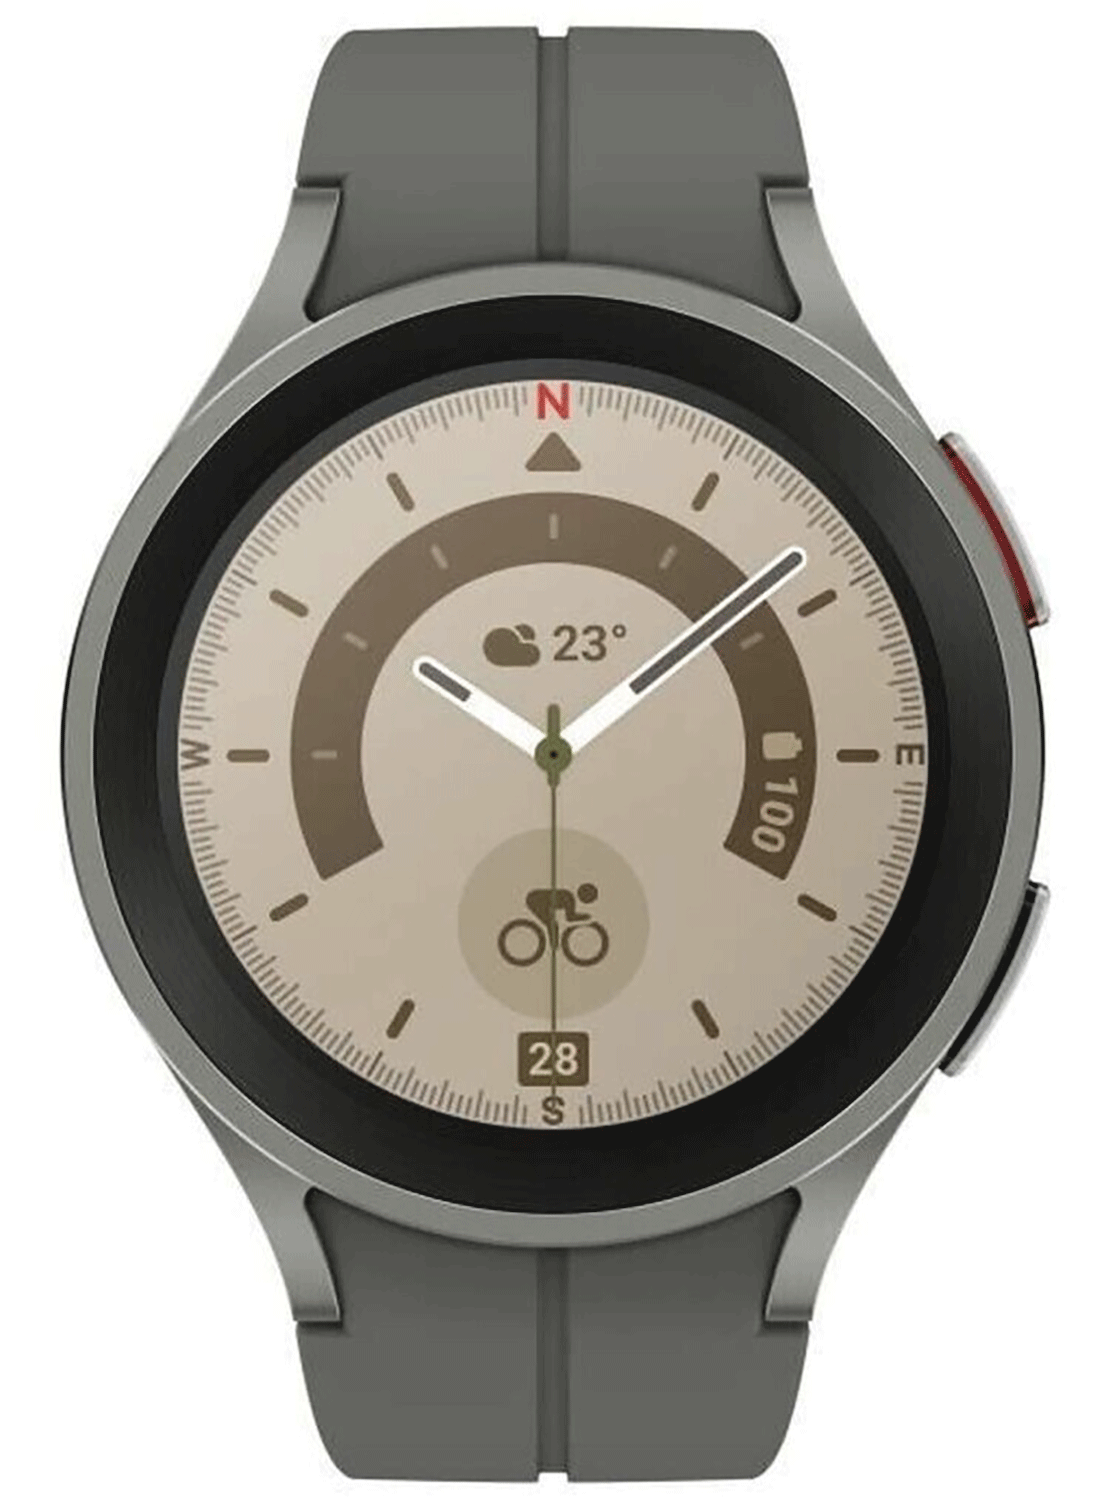 Samsung Galaxy Watch 5 Pro LTE 45mm SM-R925F